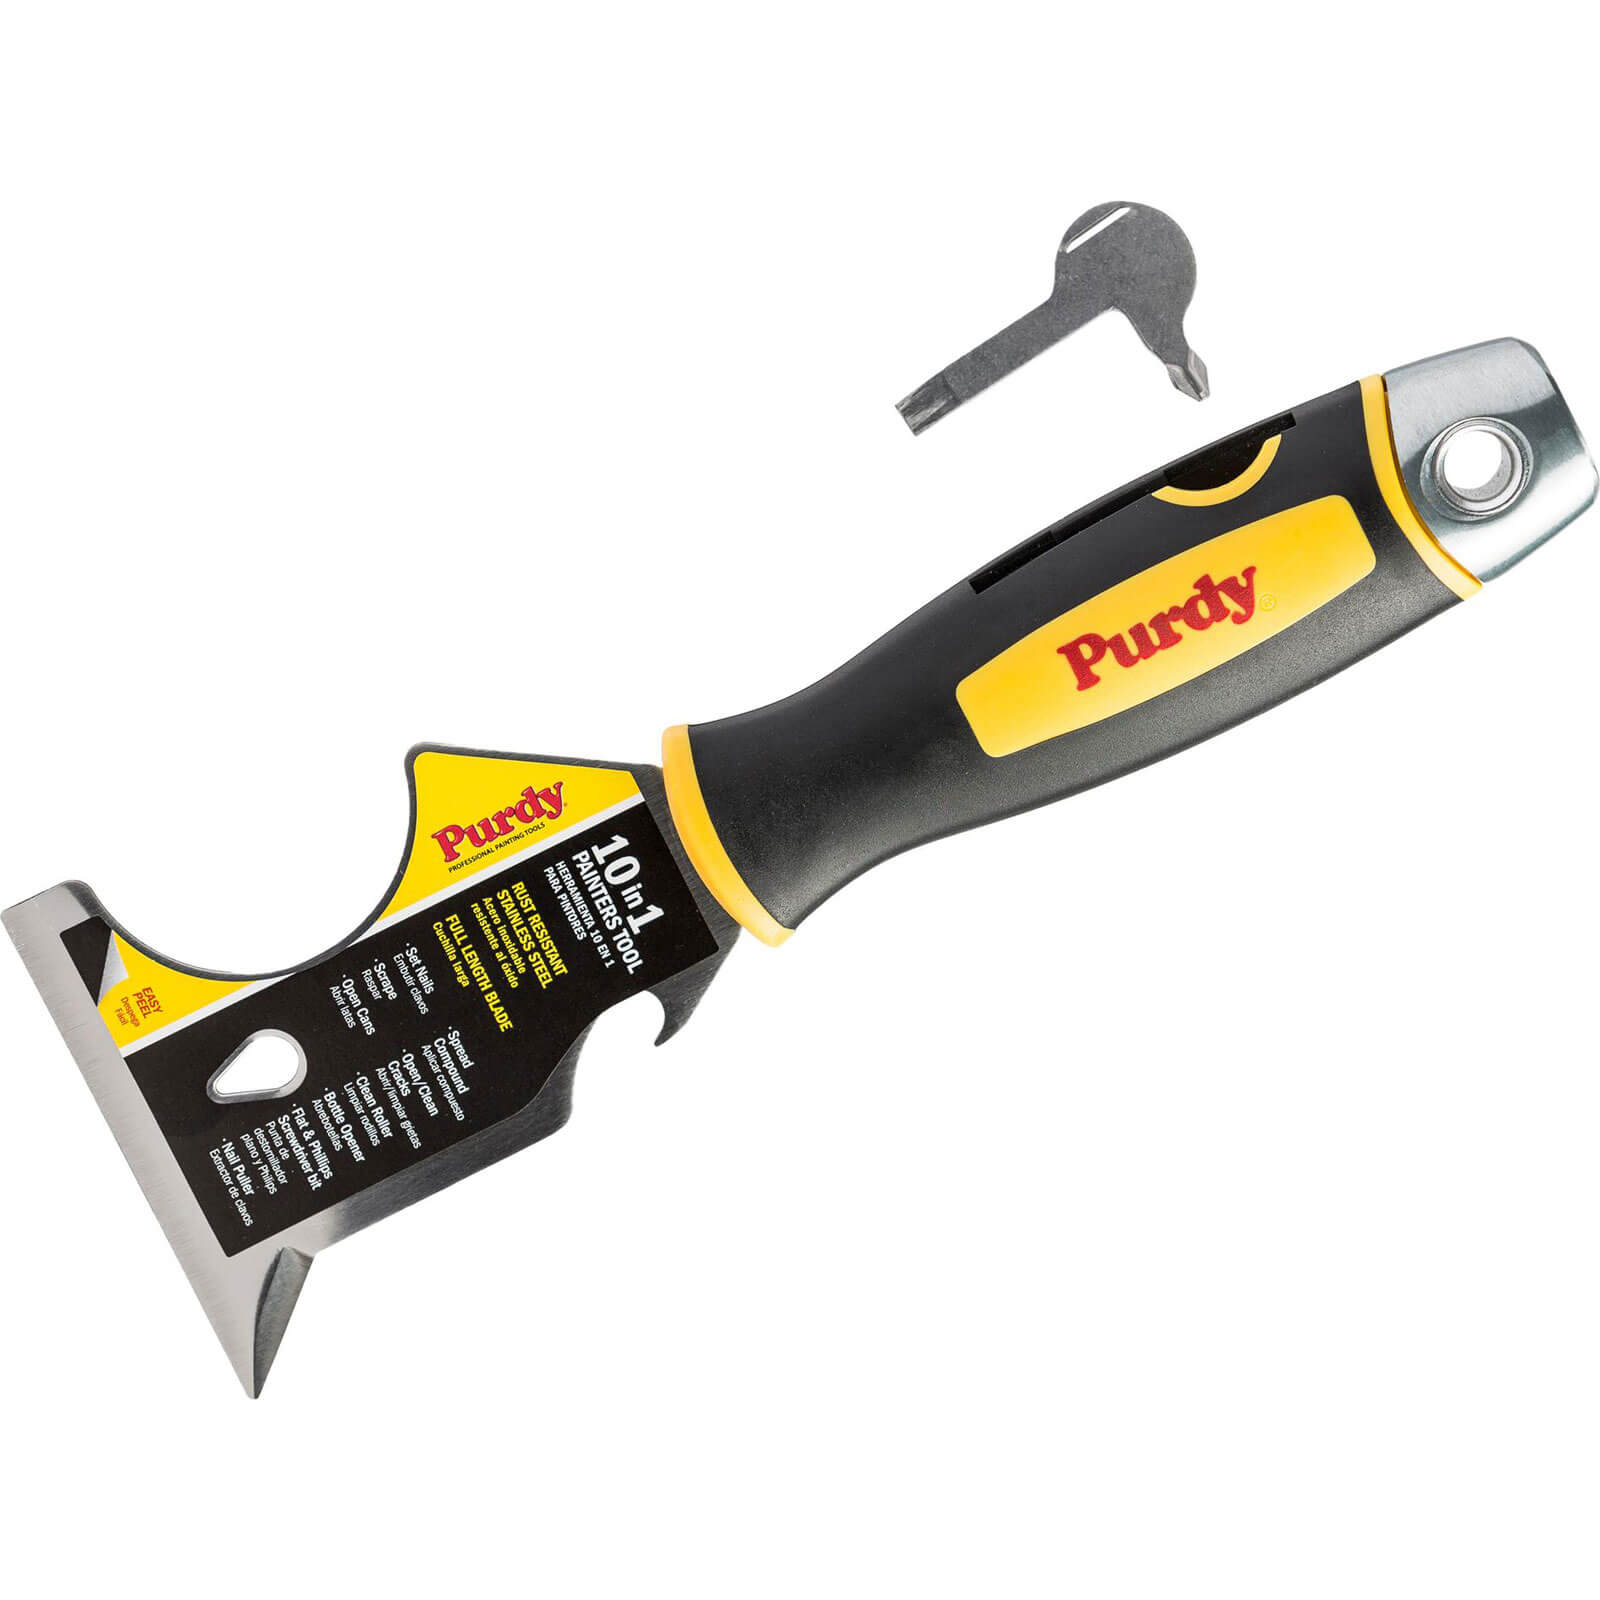 Photo of Purdy Premium 10 In 1 Multi-tool Scraper Hammer Roller Cleaner Nail Puller